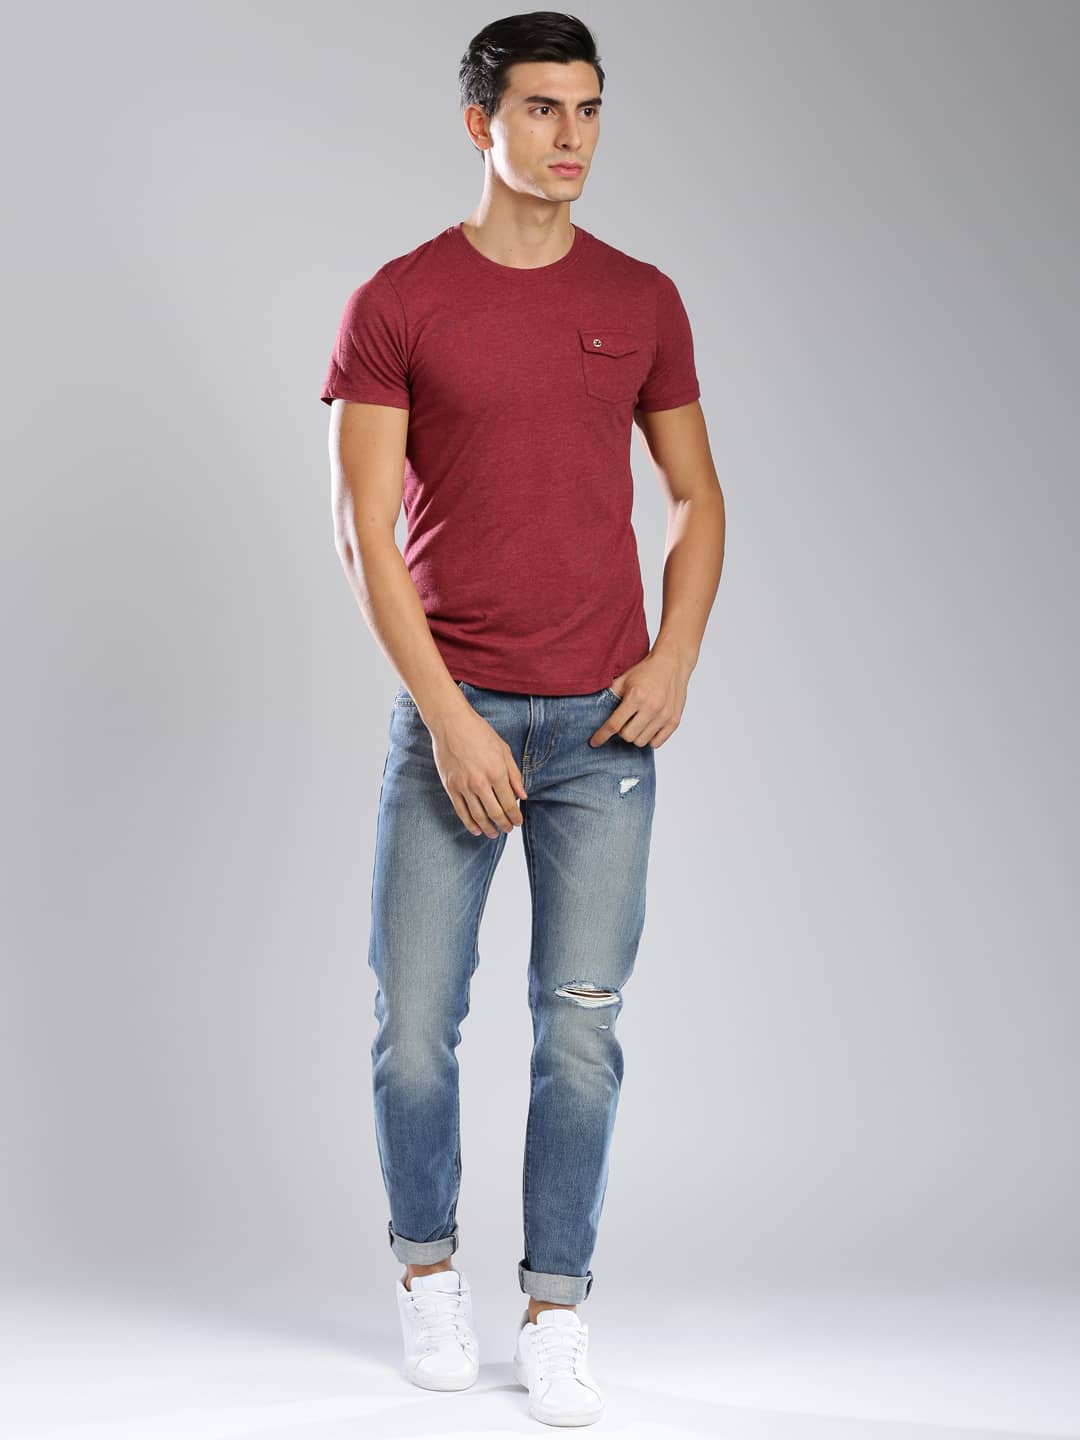 Guy wearing Slim Fit Jeans